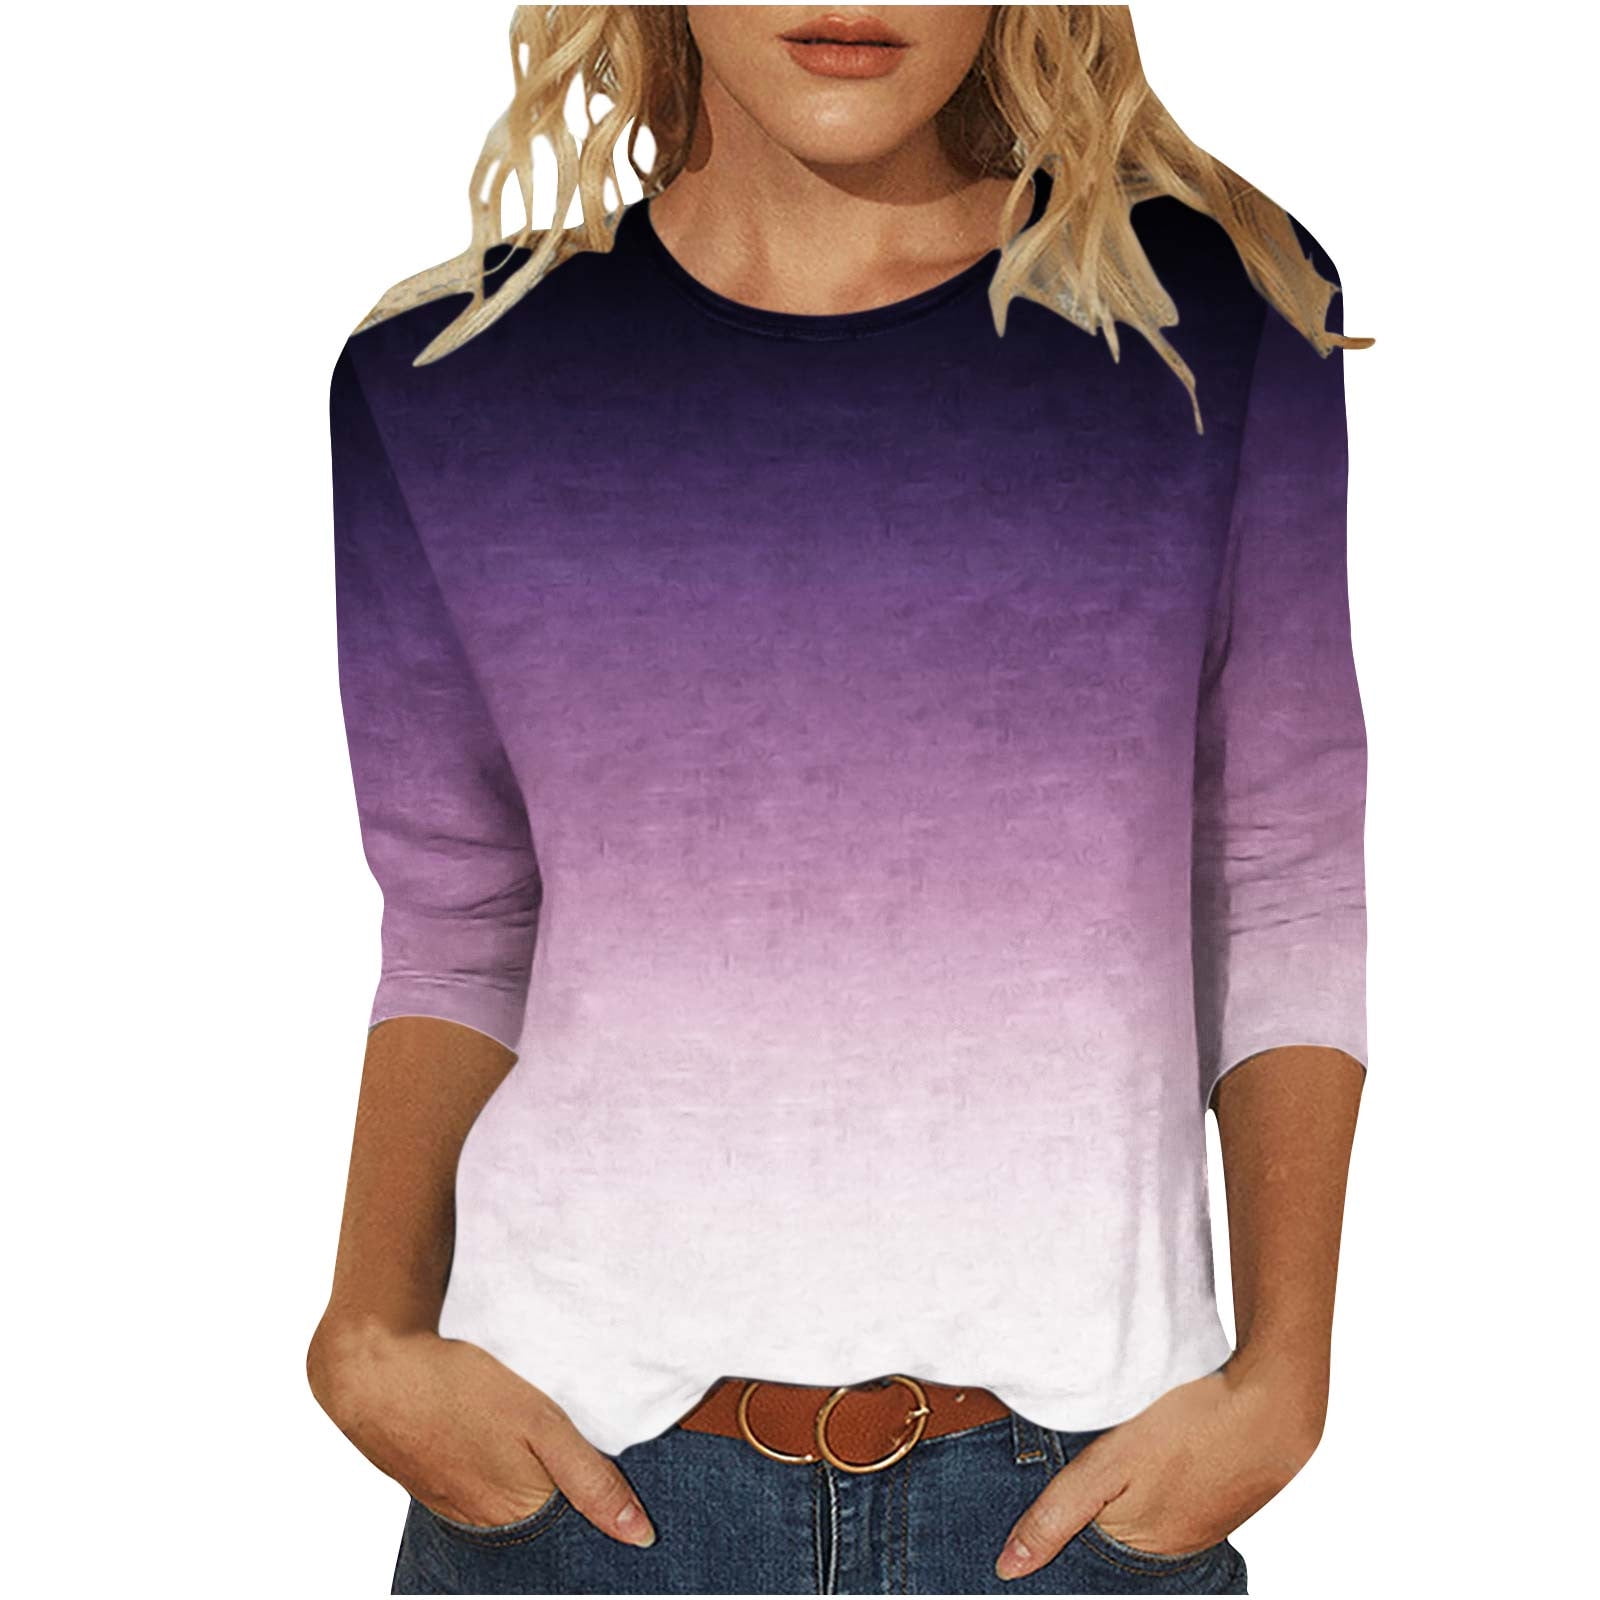 Baikeli Woman Shirts Clearance Sale Casual 3/4 Sleeve Tops for Women ...